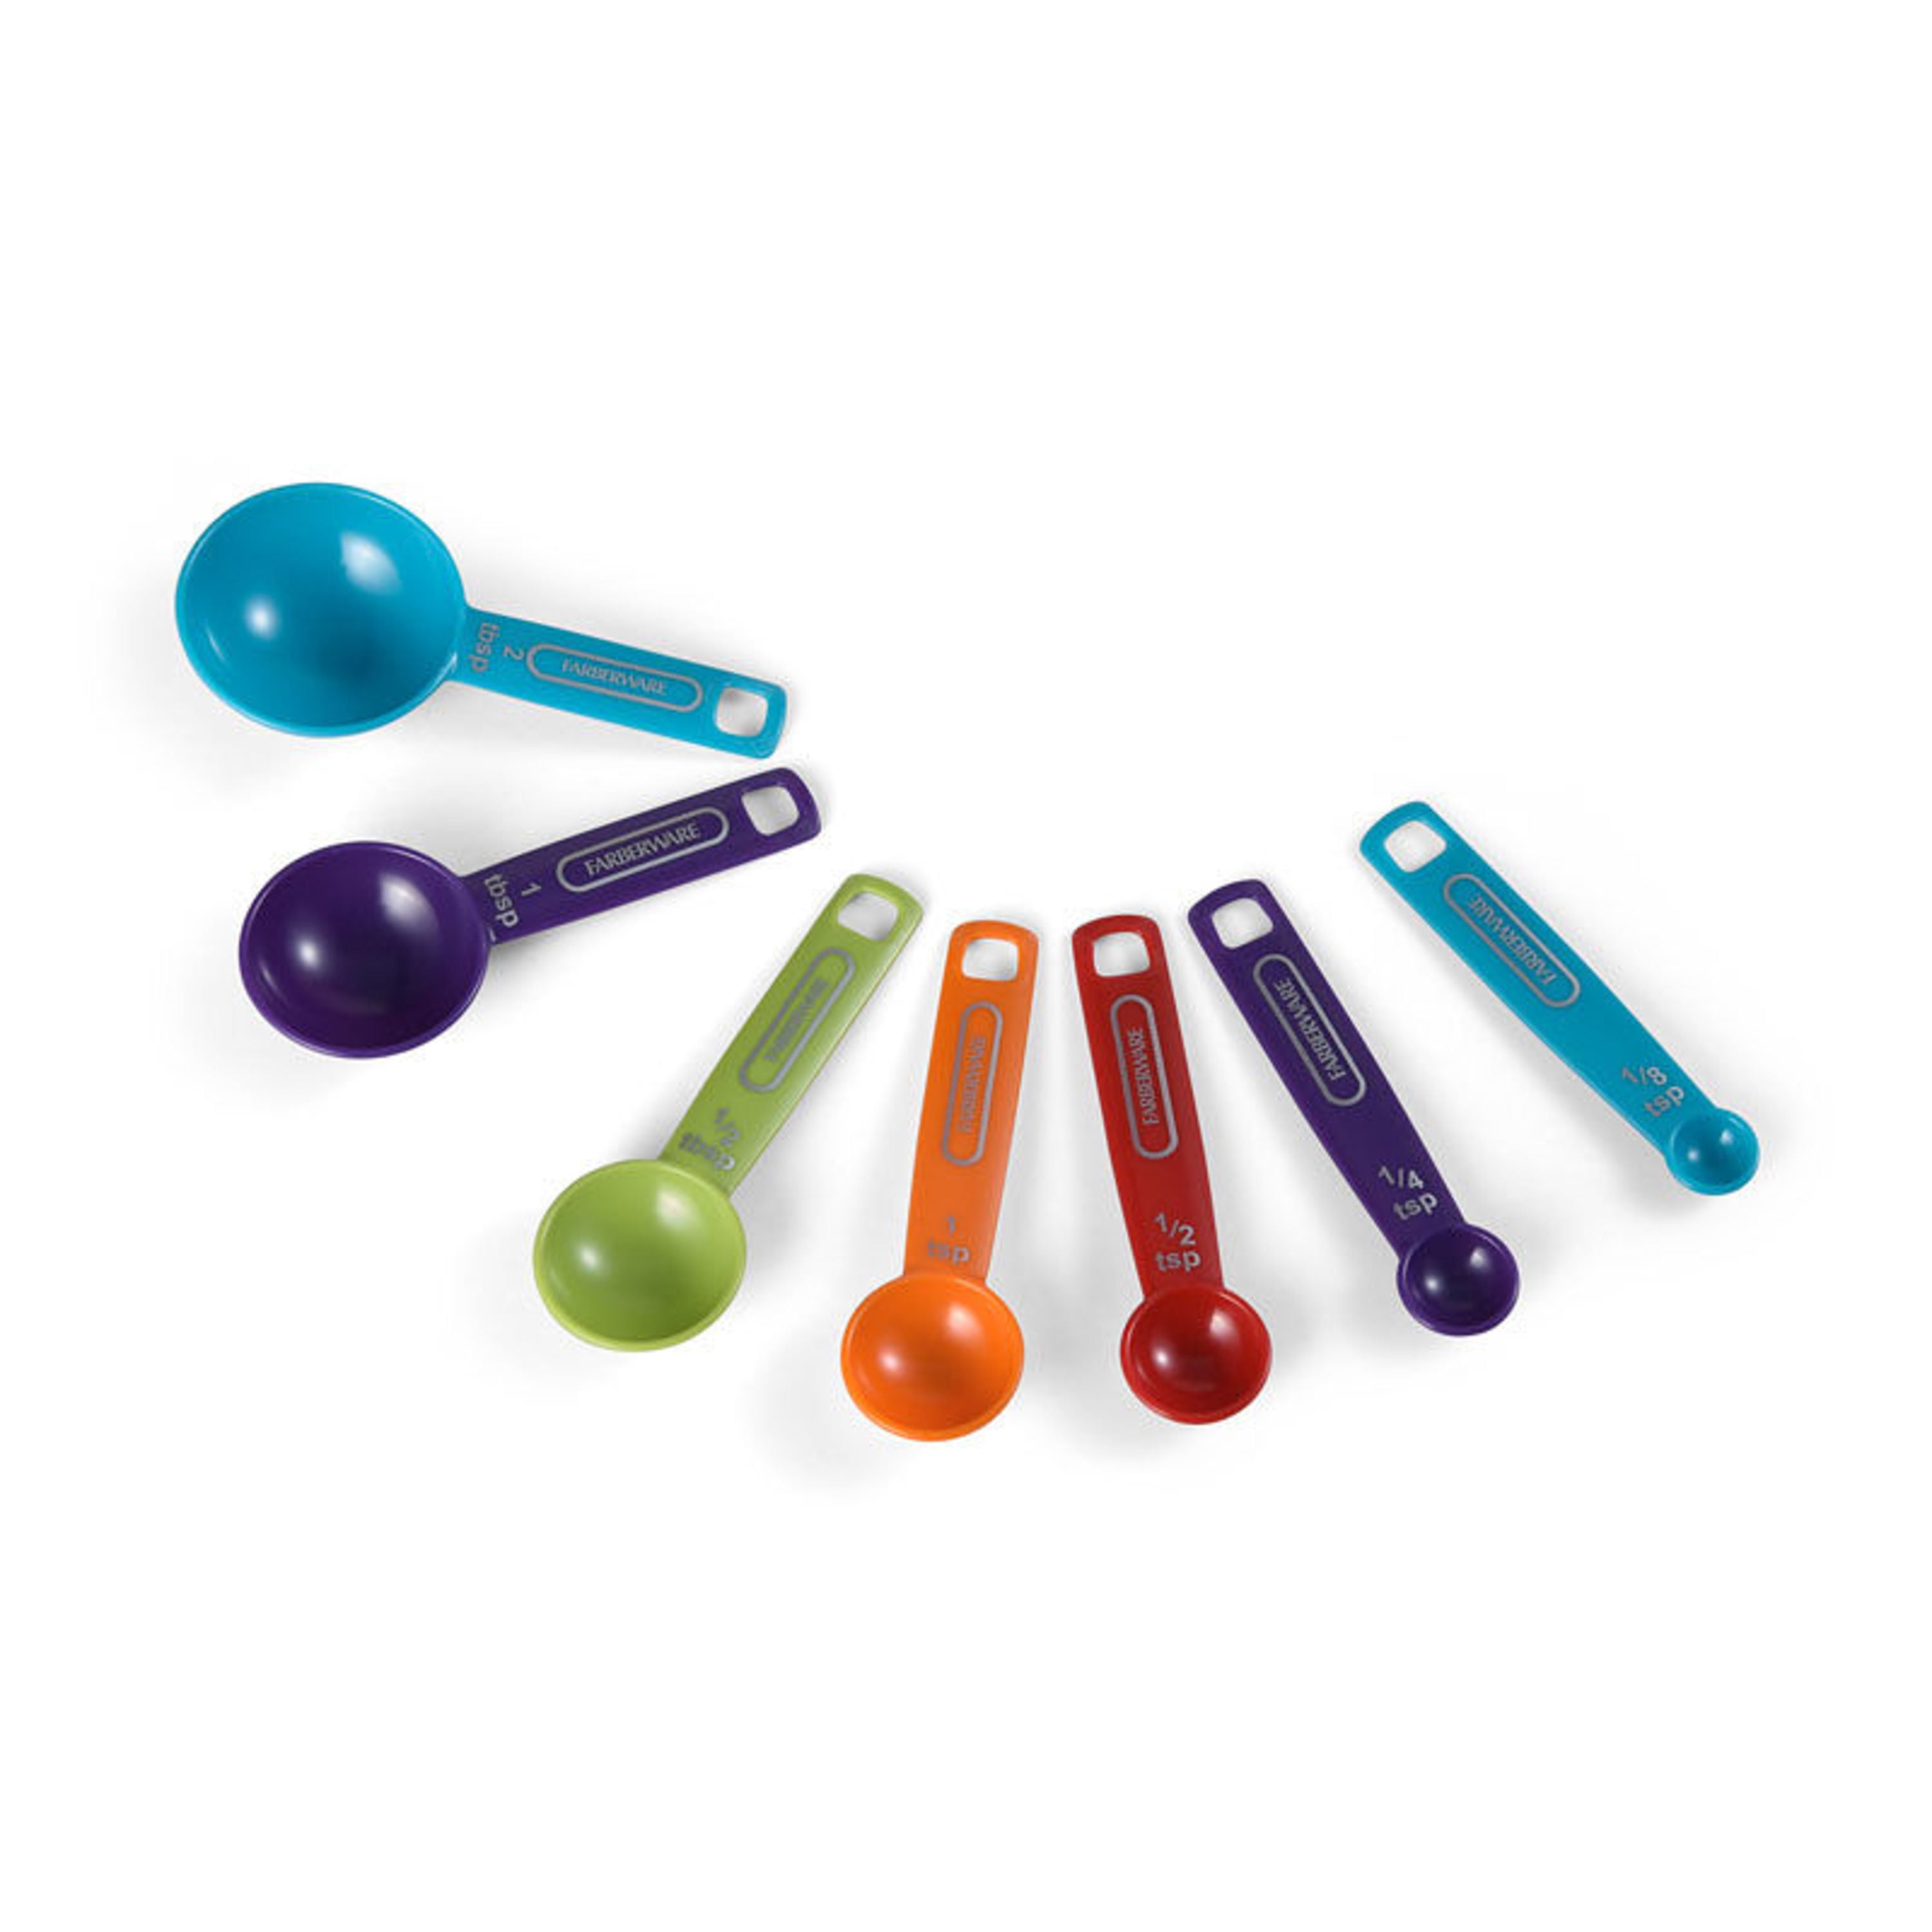 Farberware Bakers Advantage Measuring Spoons, Set of 5, Assorted